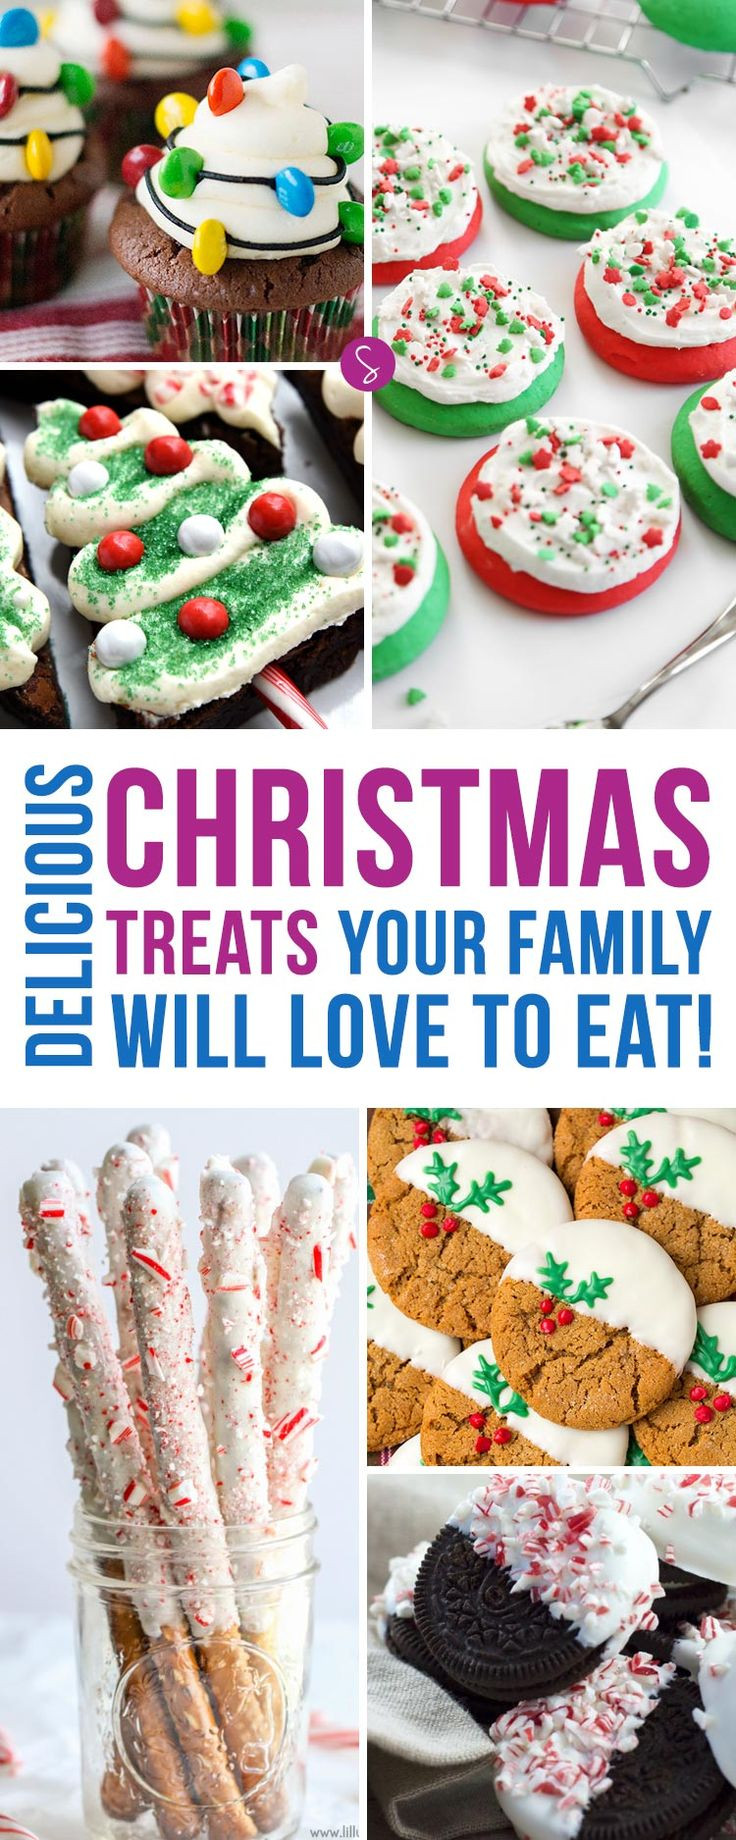 Homemade Christmas Cookies For Sale
 1000 Bake Sale Ideas on Pinterest